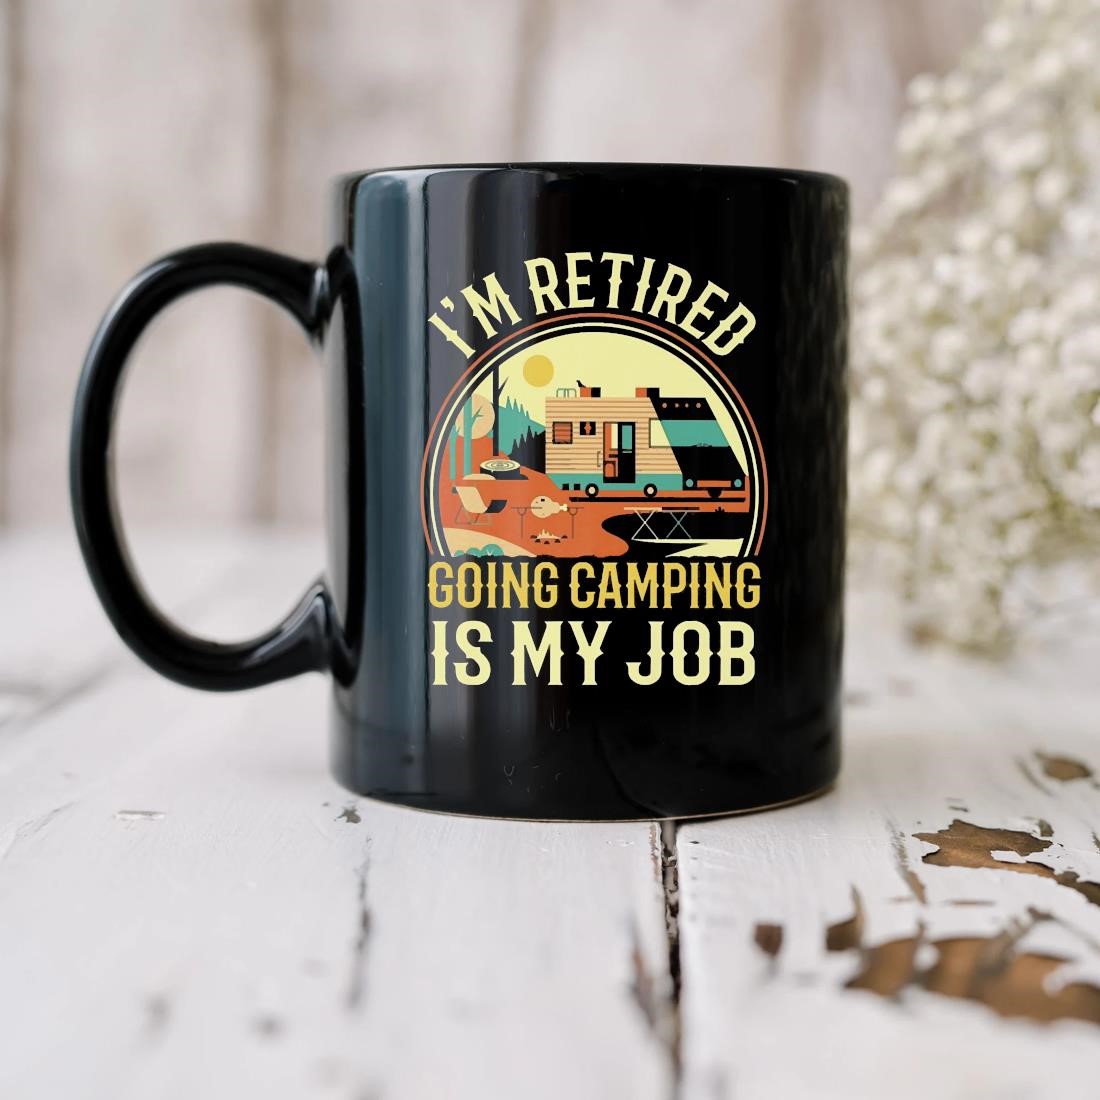 I'm Retired Going Camping Is My Job Mug biu.jpg